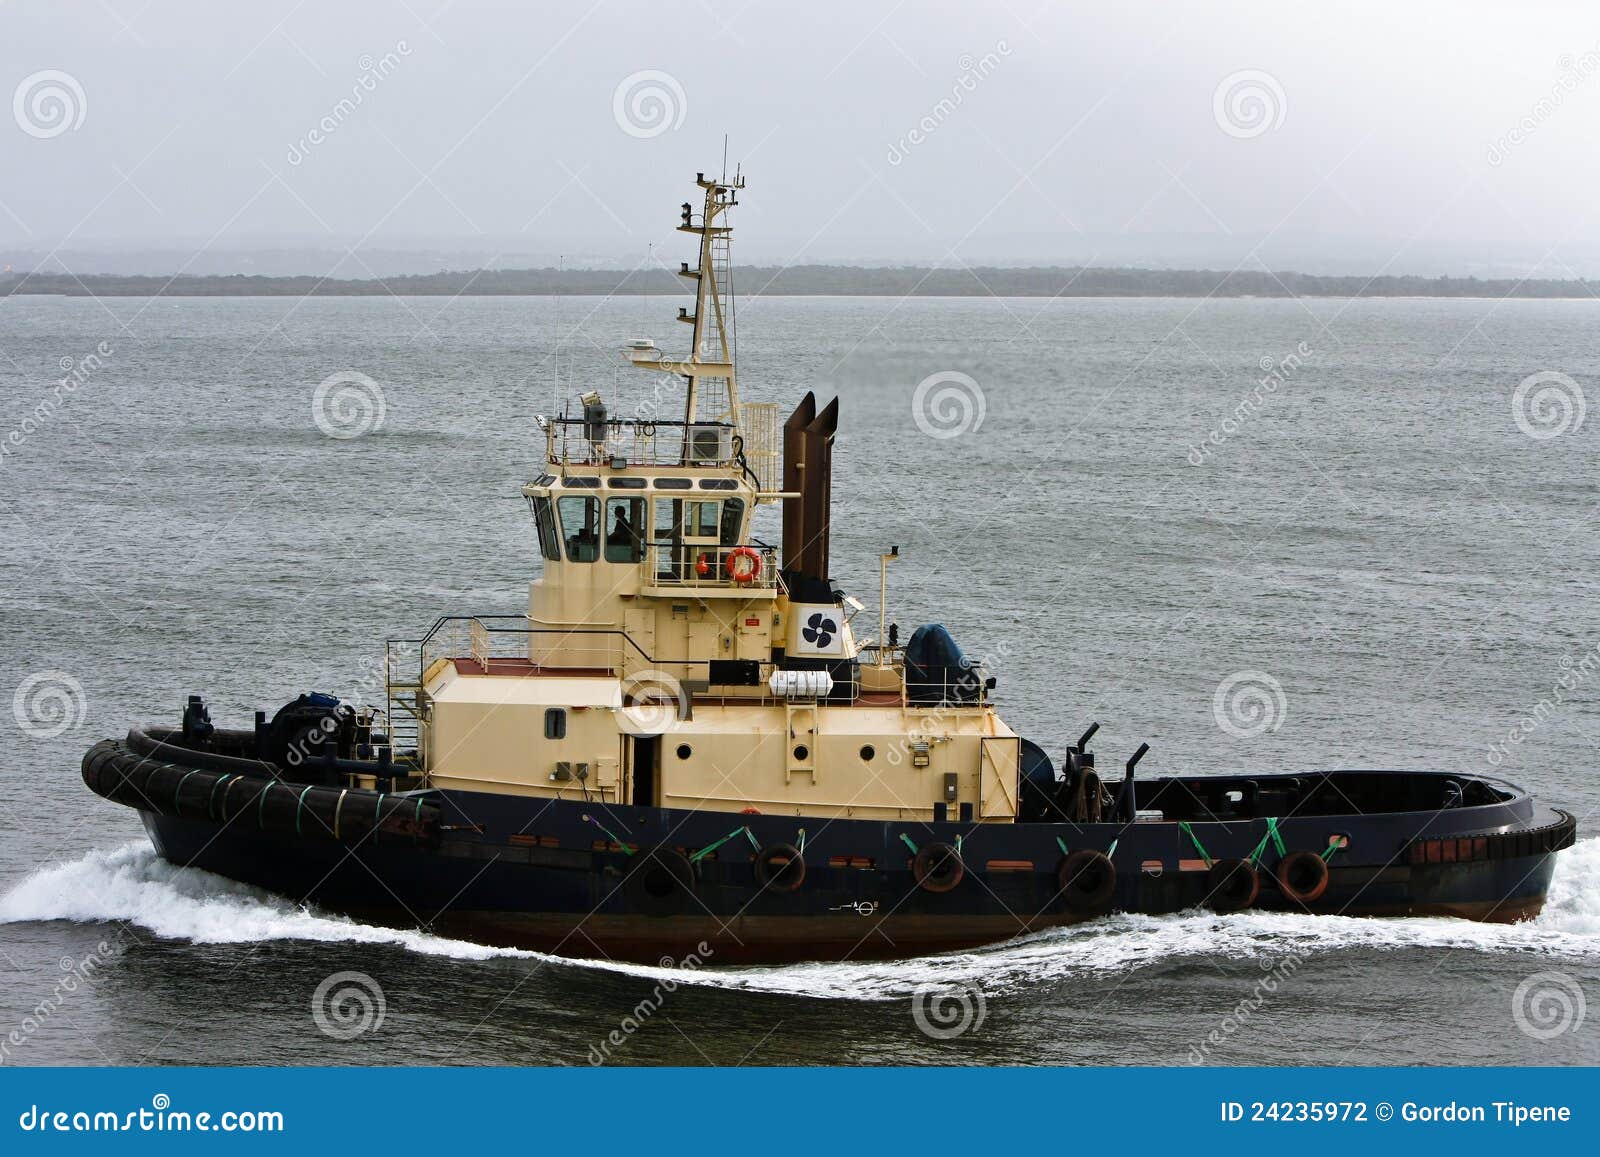 Large tug boat at sea. stock photo. Image of vessel, ship 